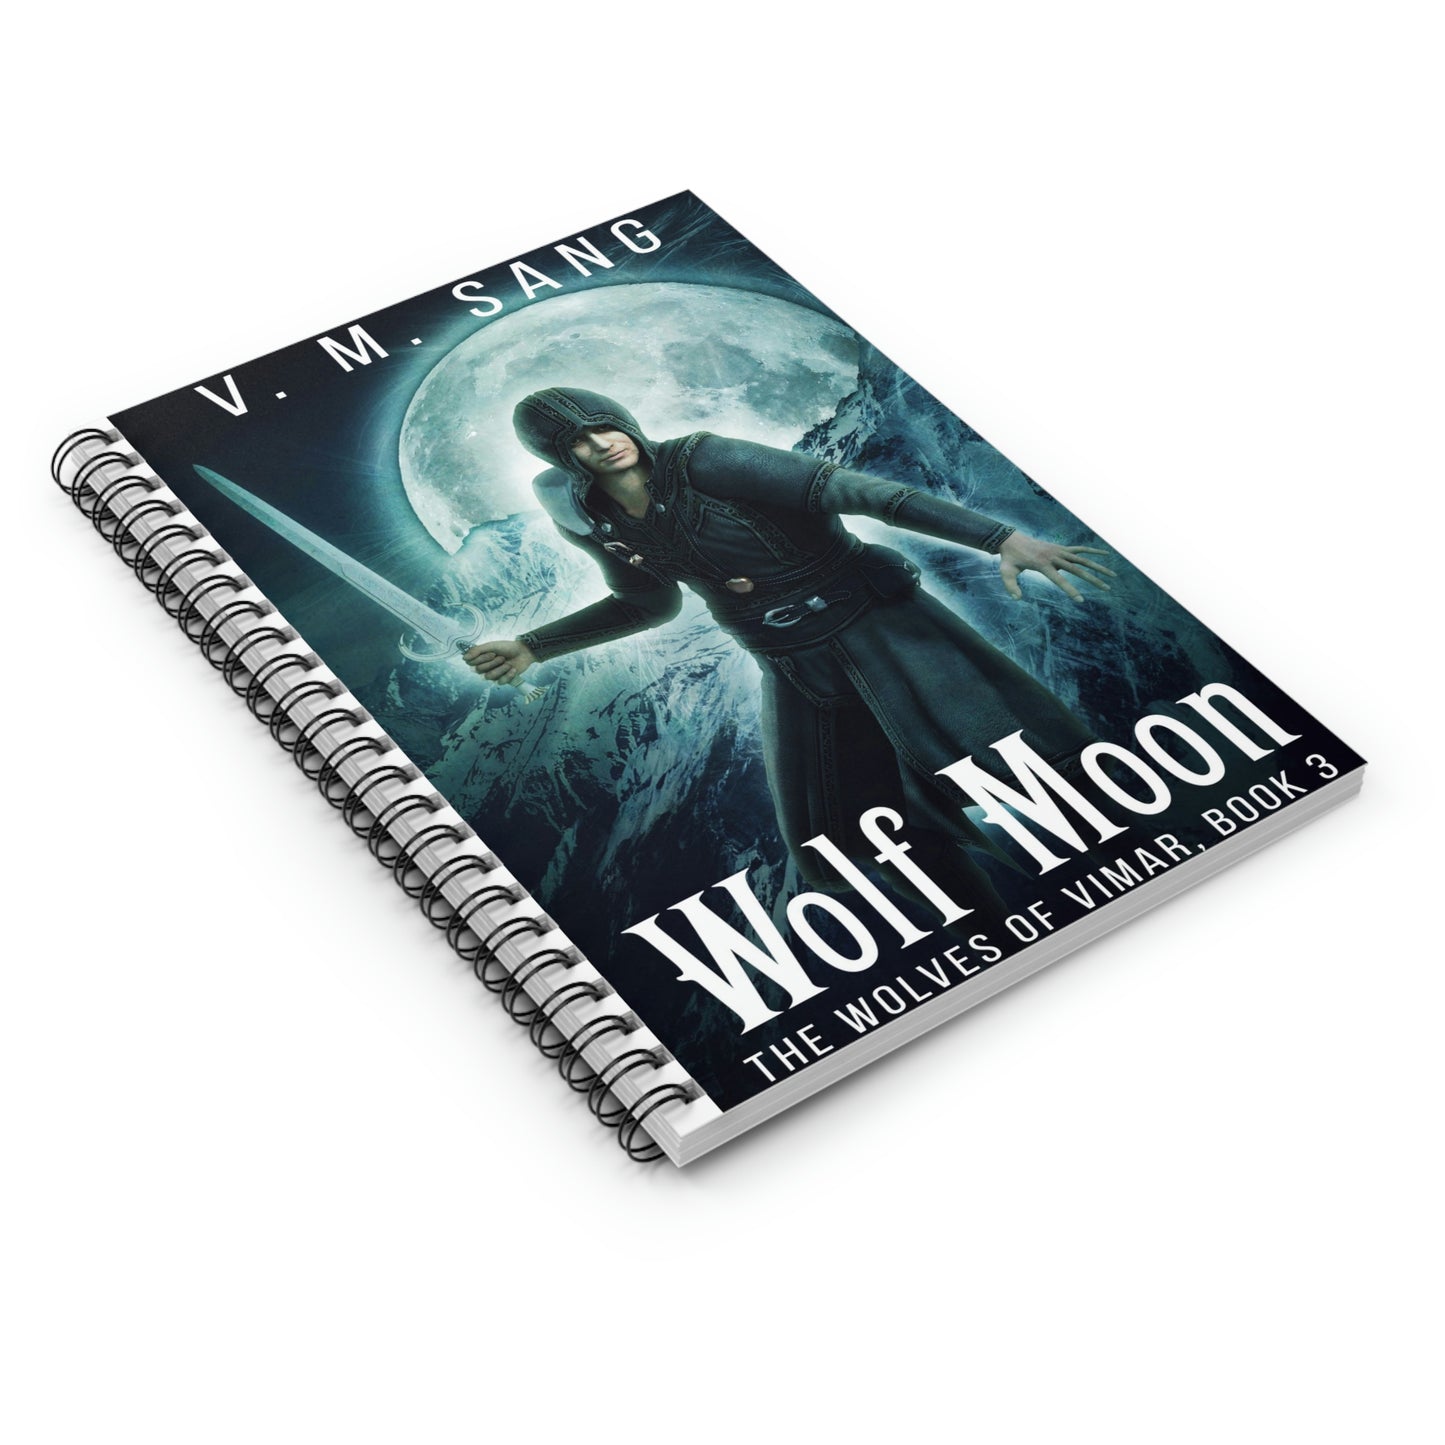 Wolf Moon - Spiral Notebook